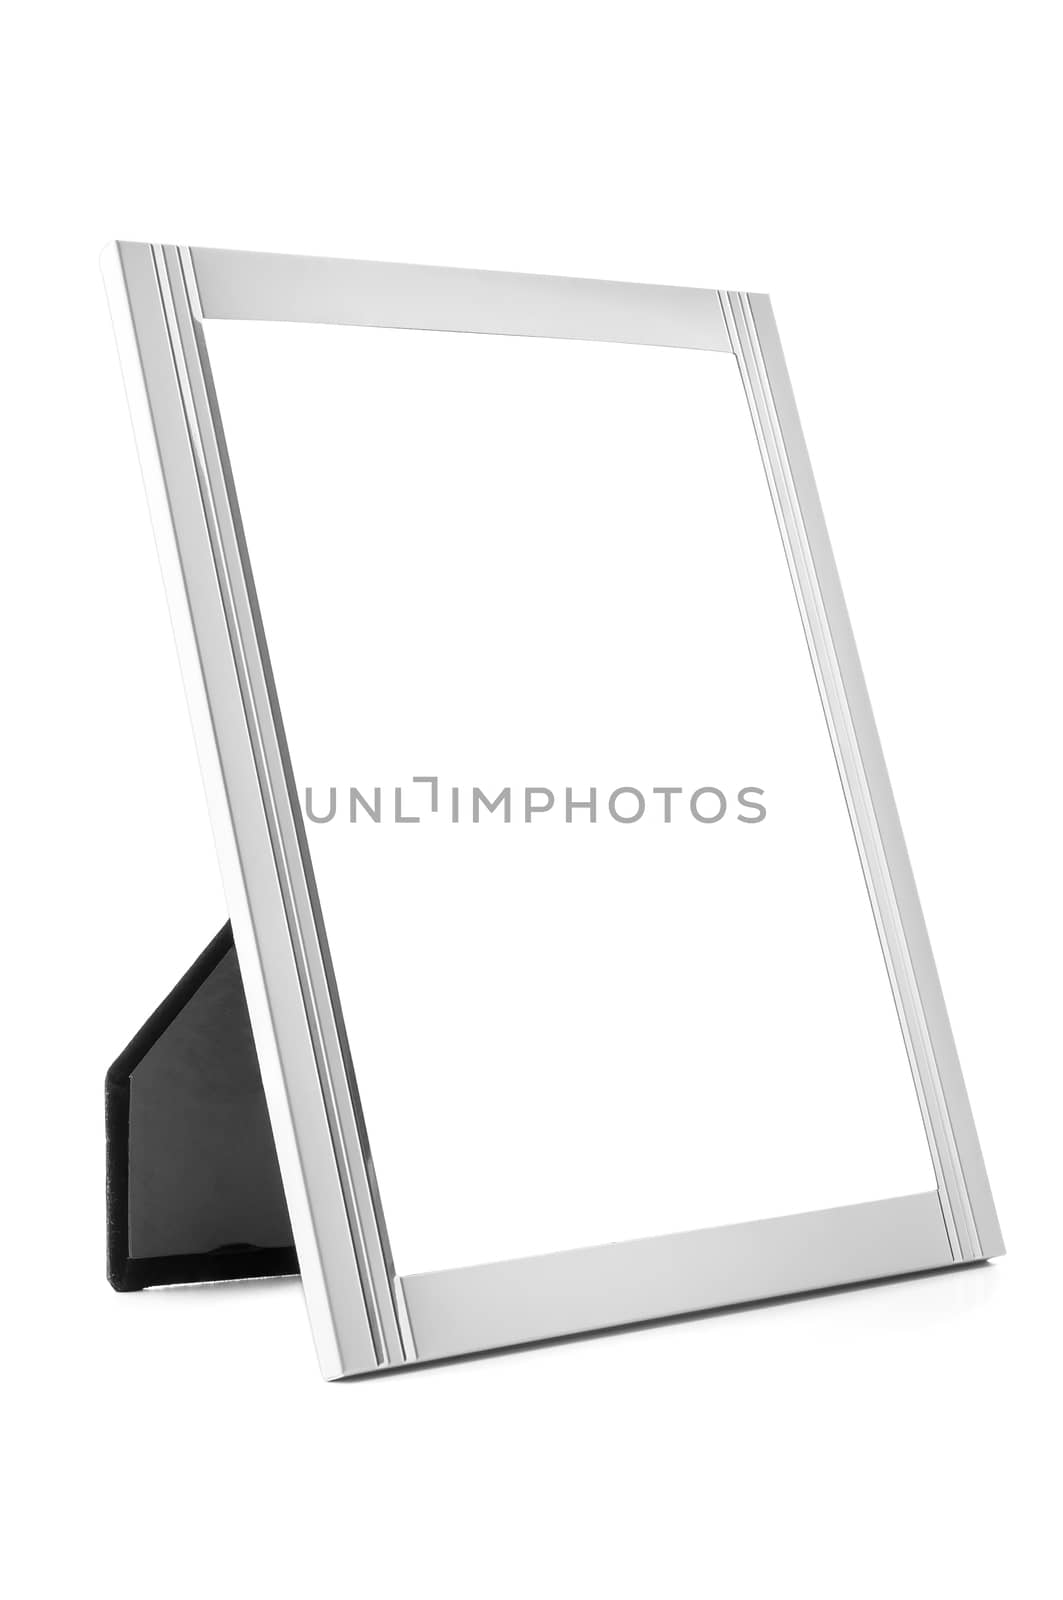 Aluminum decorativephoto frame isolated on white background with clipping path